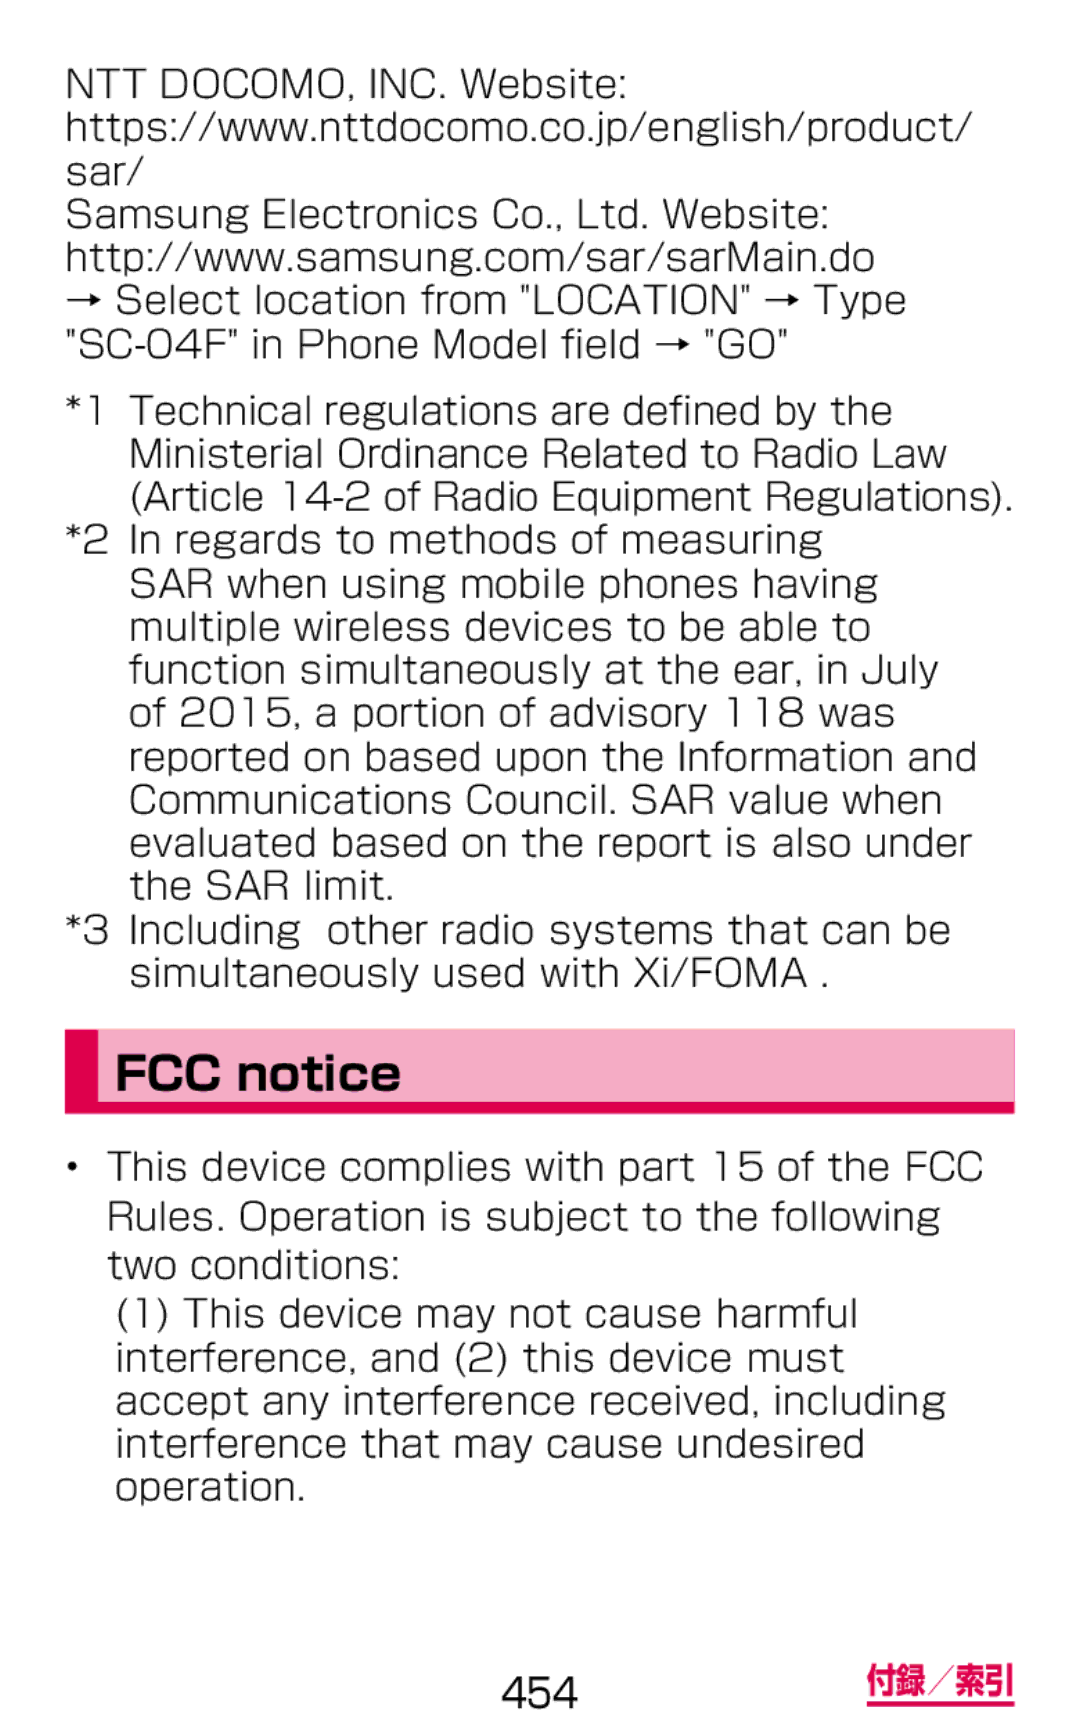 Samsung SM-G900DZWEDCM, SM-G900DSIEDCM, SM-G900DZKEDCM manual FCC notice 